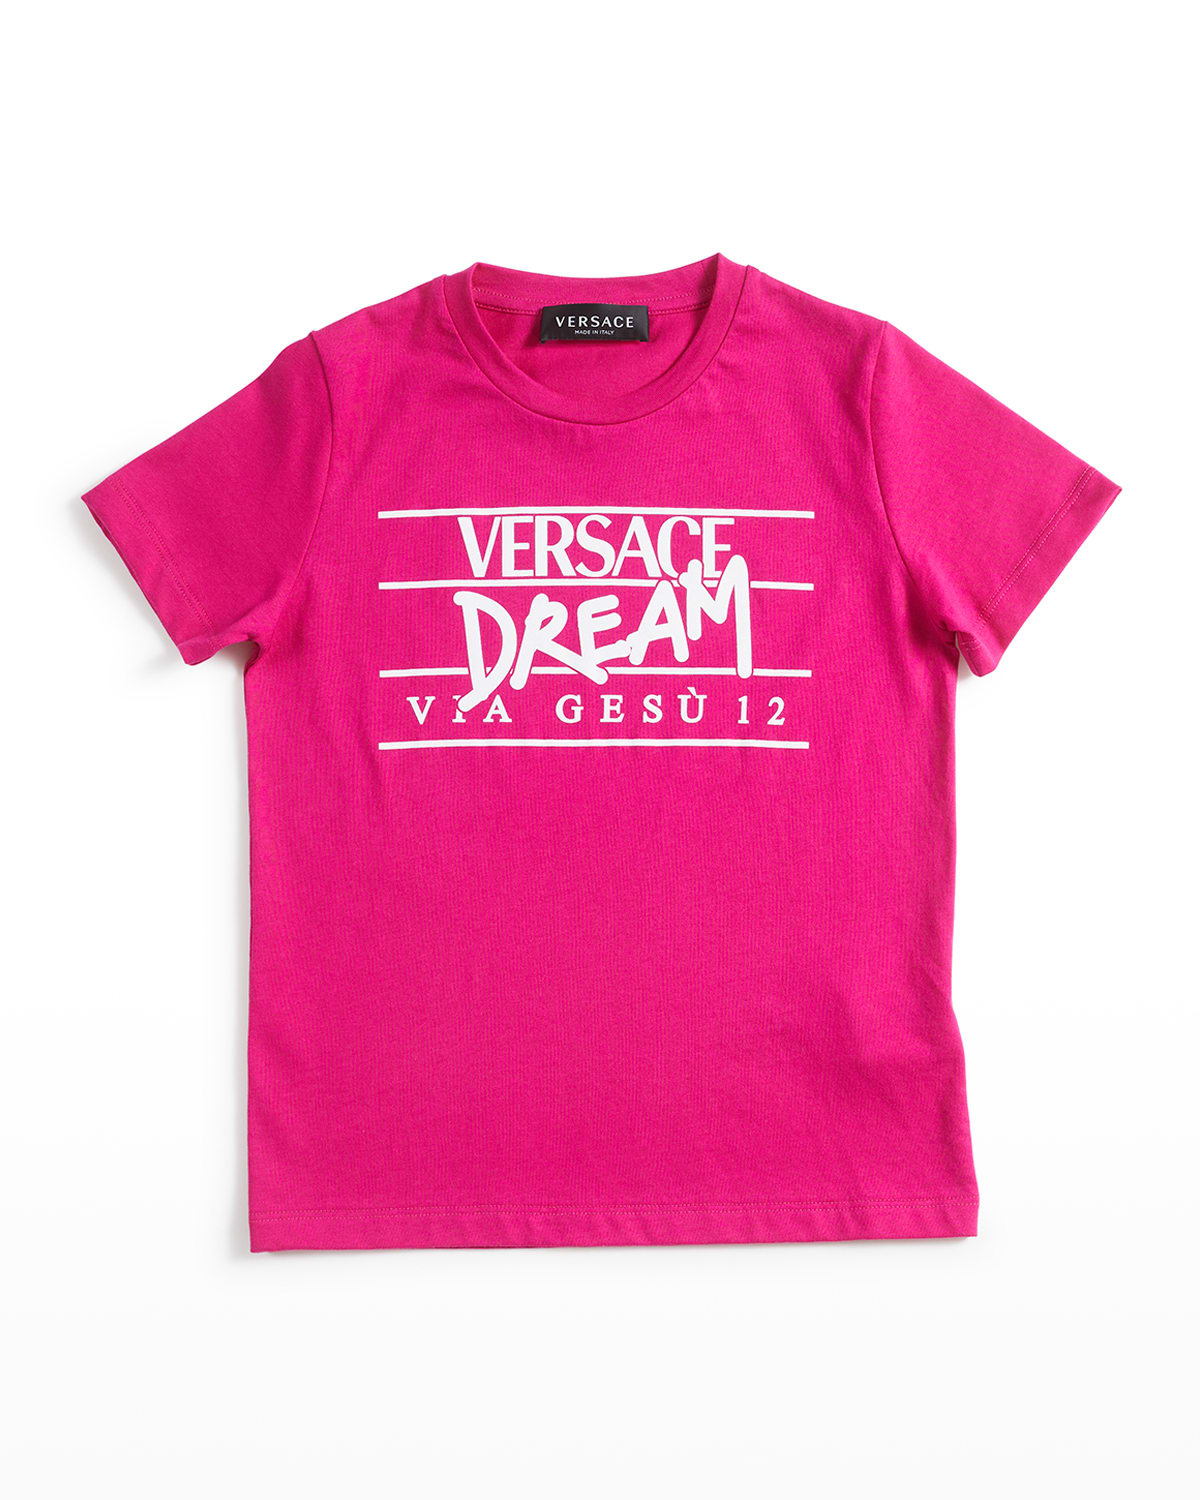 Kid's Versace Dream T-Shirt, Size 4-6